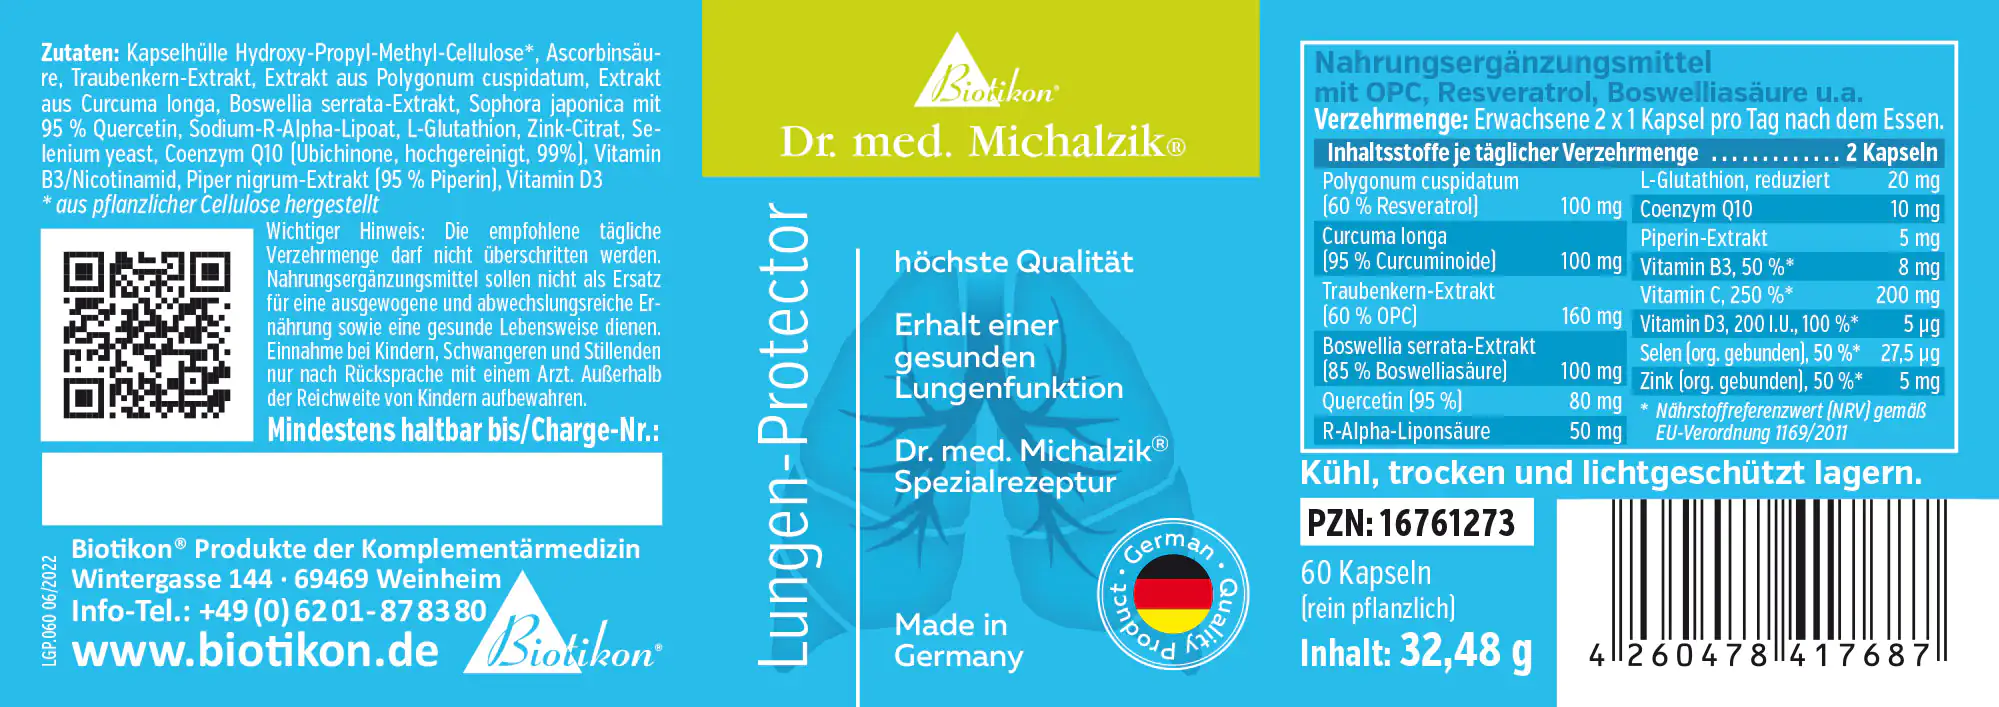 Lungen-Protector nach Dr. med. Michalzik